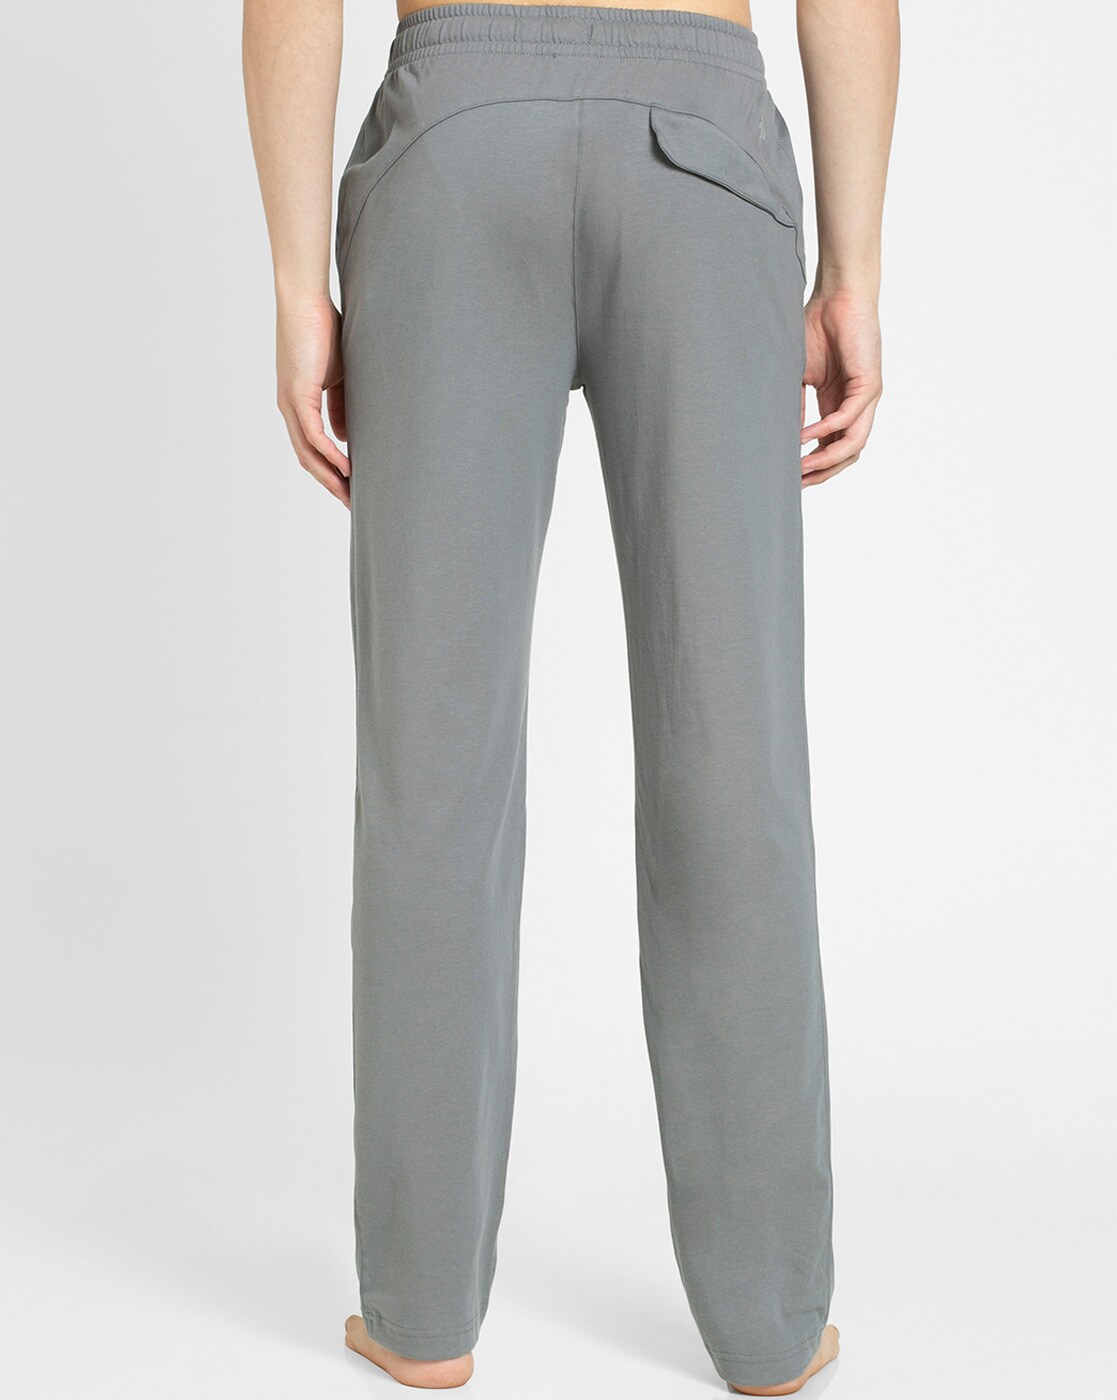 Buy Grey Track Pants for Men by JOCKEY Online